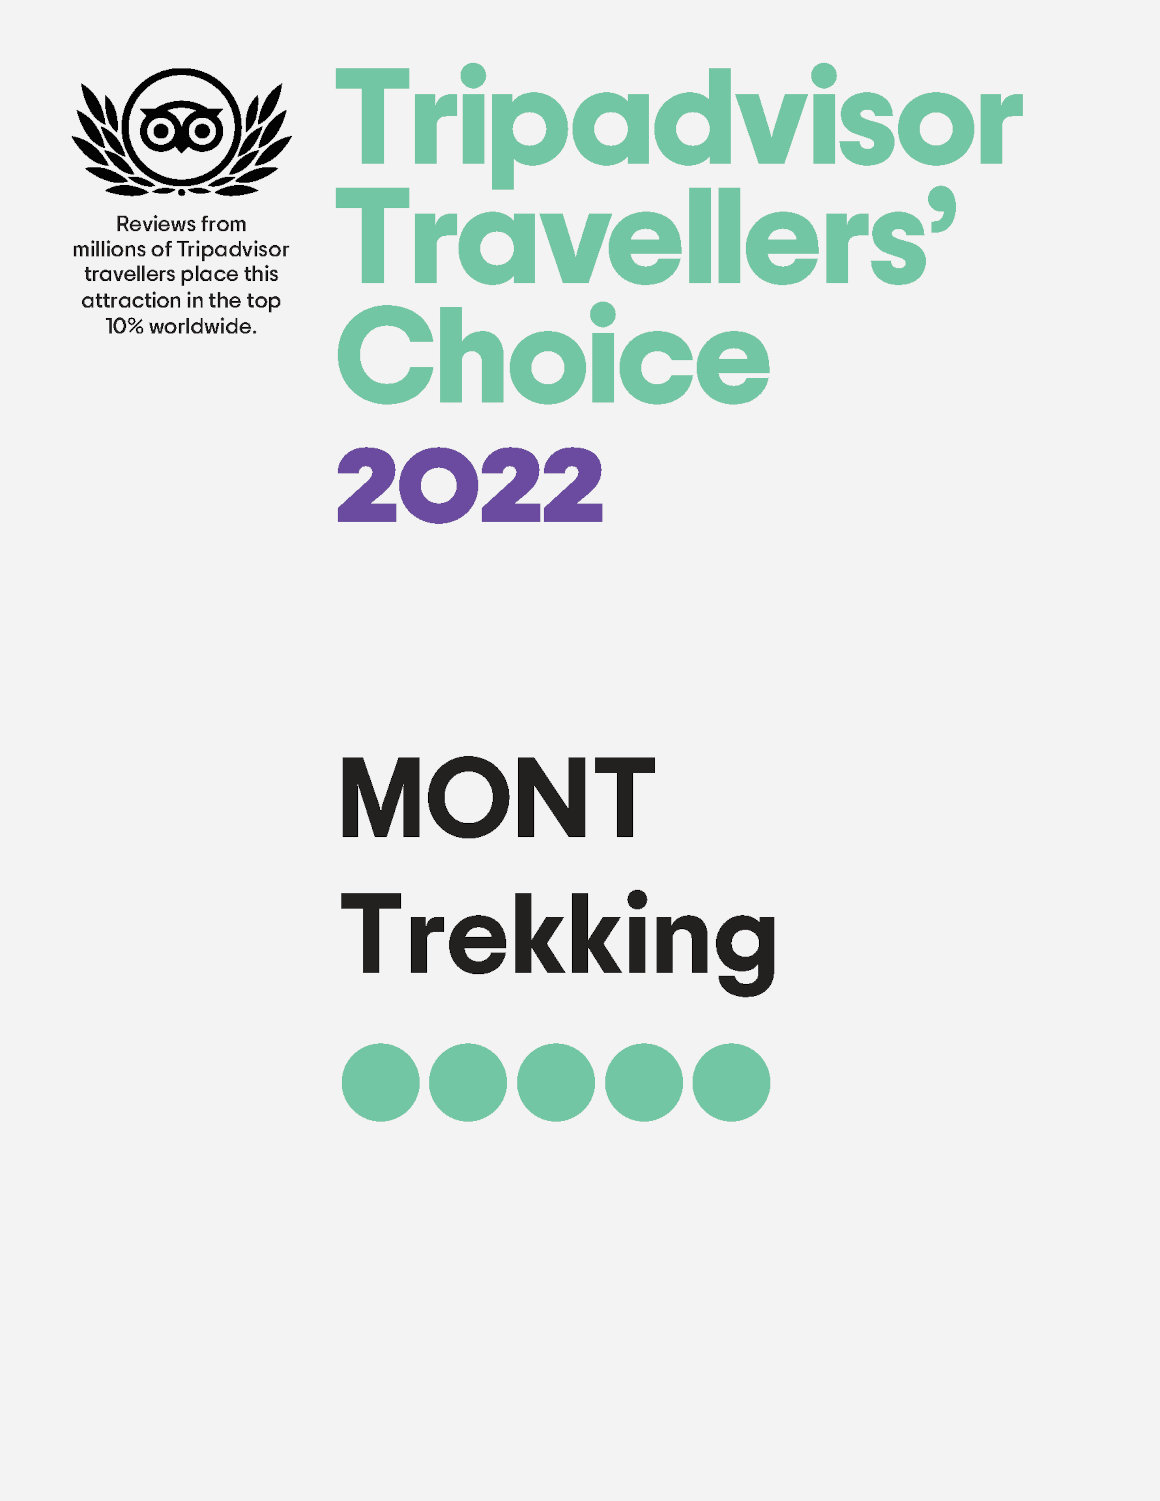 MONT Trekking TripAdvisor Traveler's Choice 2022